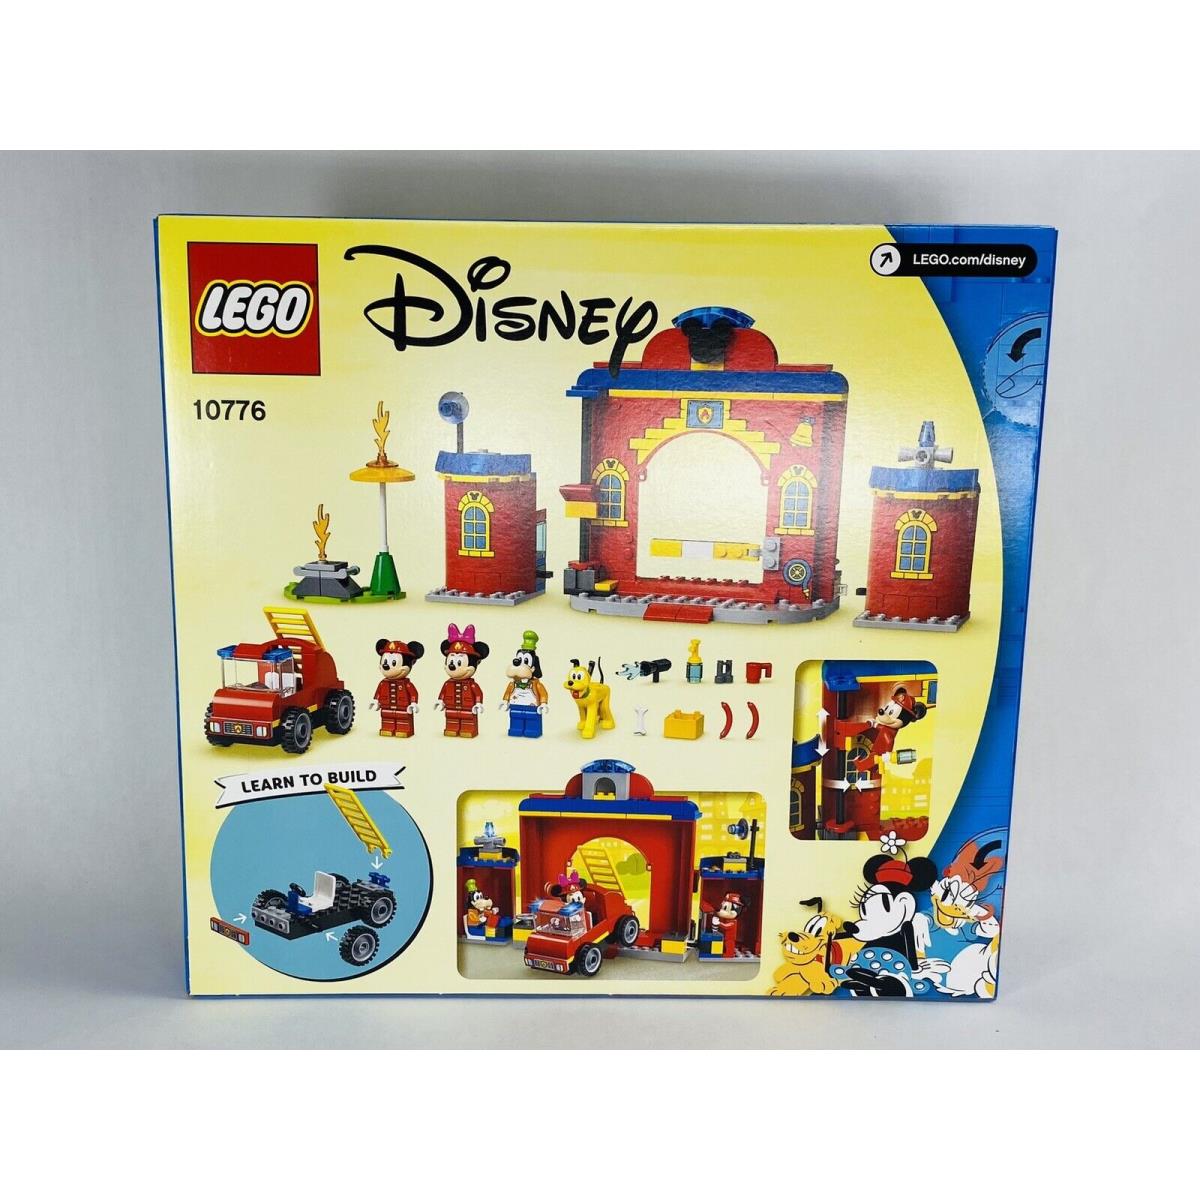 Lego 10776 Disney Mickey and Friends Fire Truck Station Goofy Pluto Minni